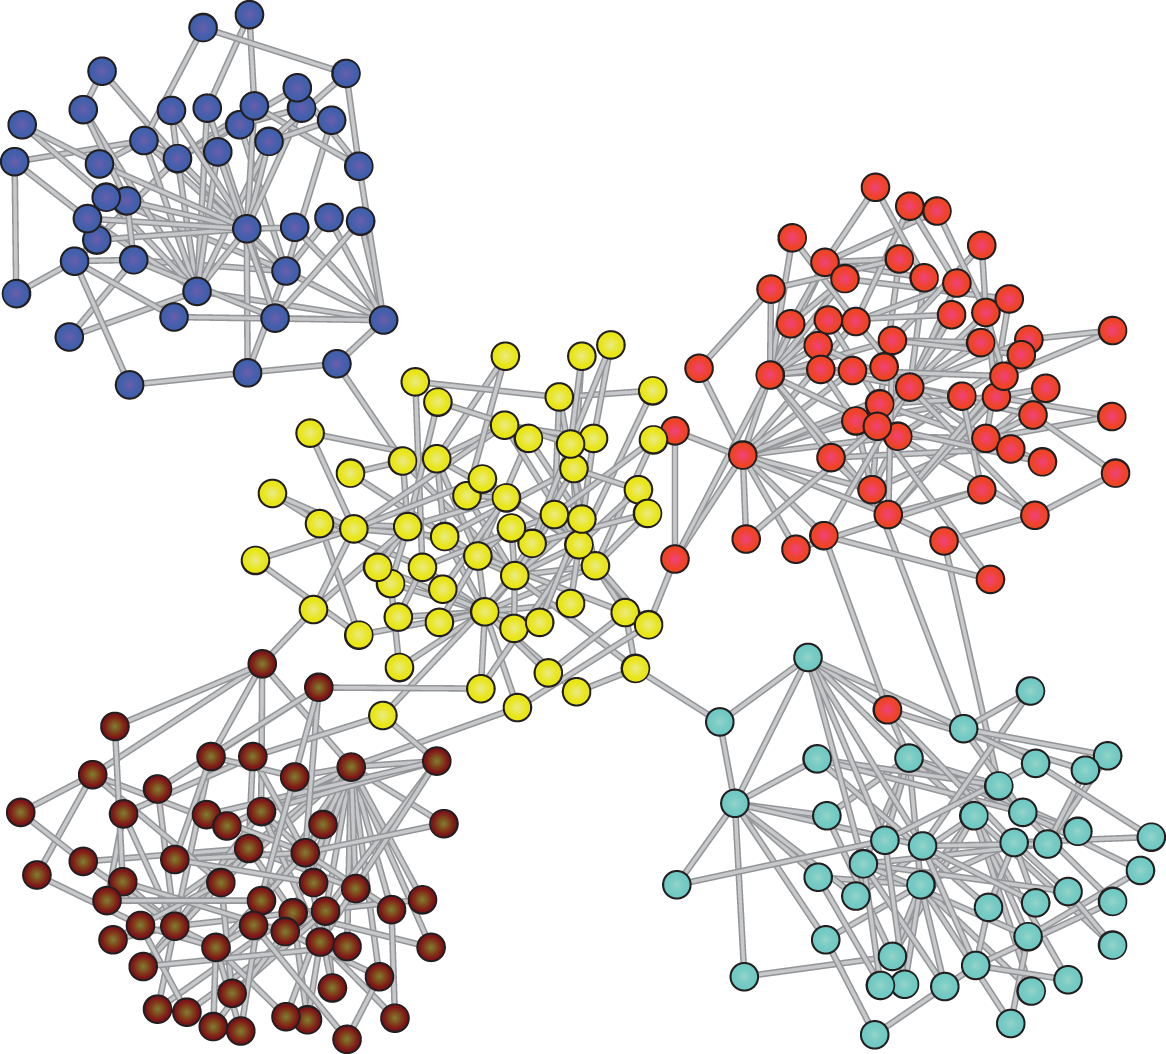 Com clustering. Кластеризация нейросети. Кластеризация рисунок. Интересные кластеры. Кластеризация в сети это.